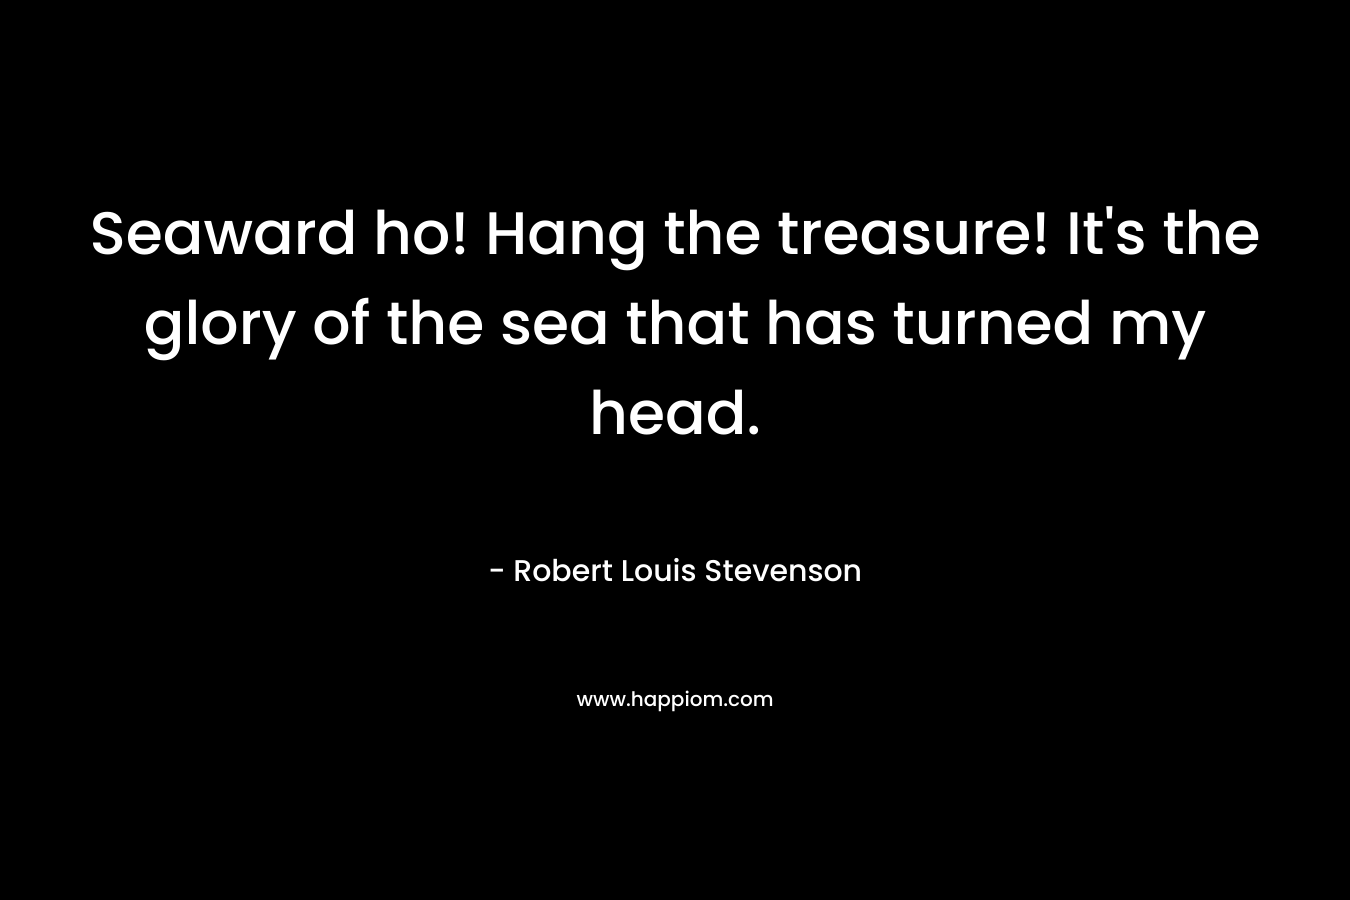 Seaward ho! Hang the treasure! It's the glory of the sea that has turned my head.